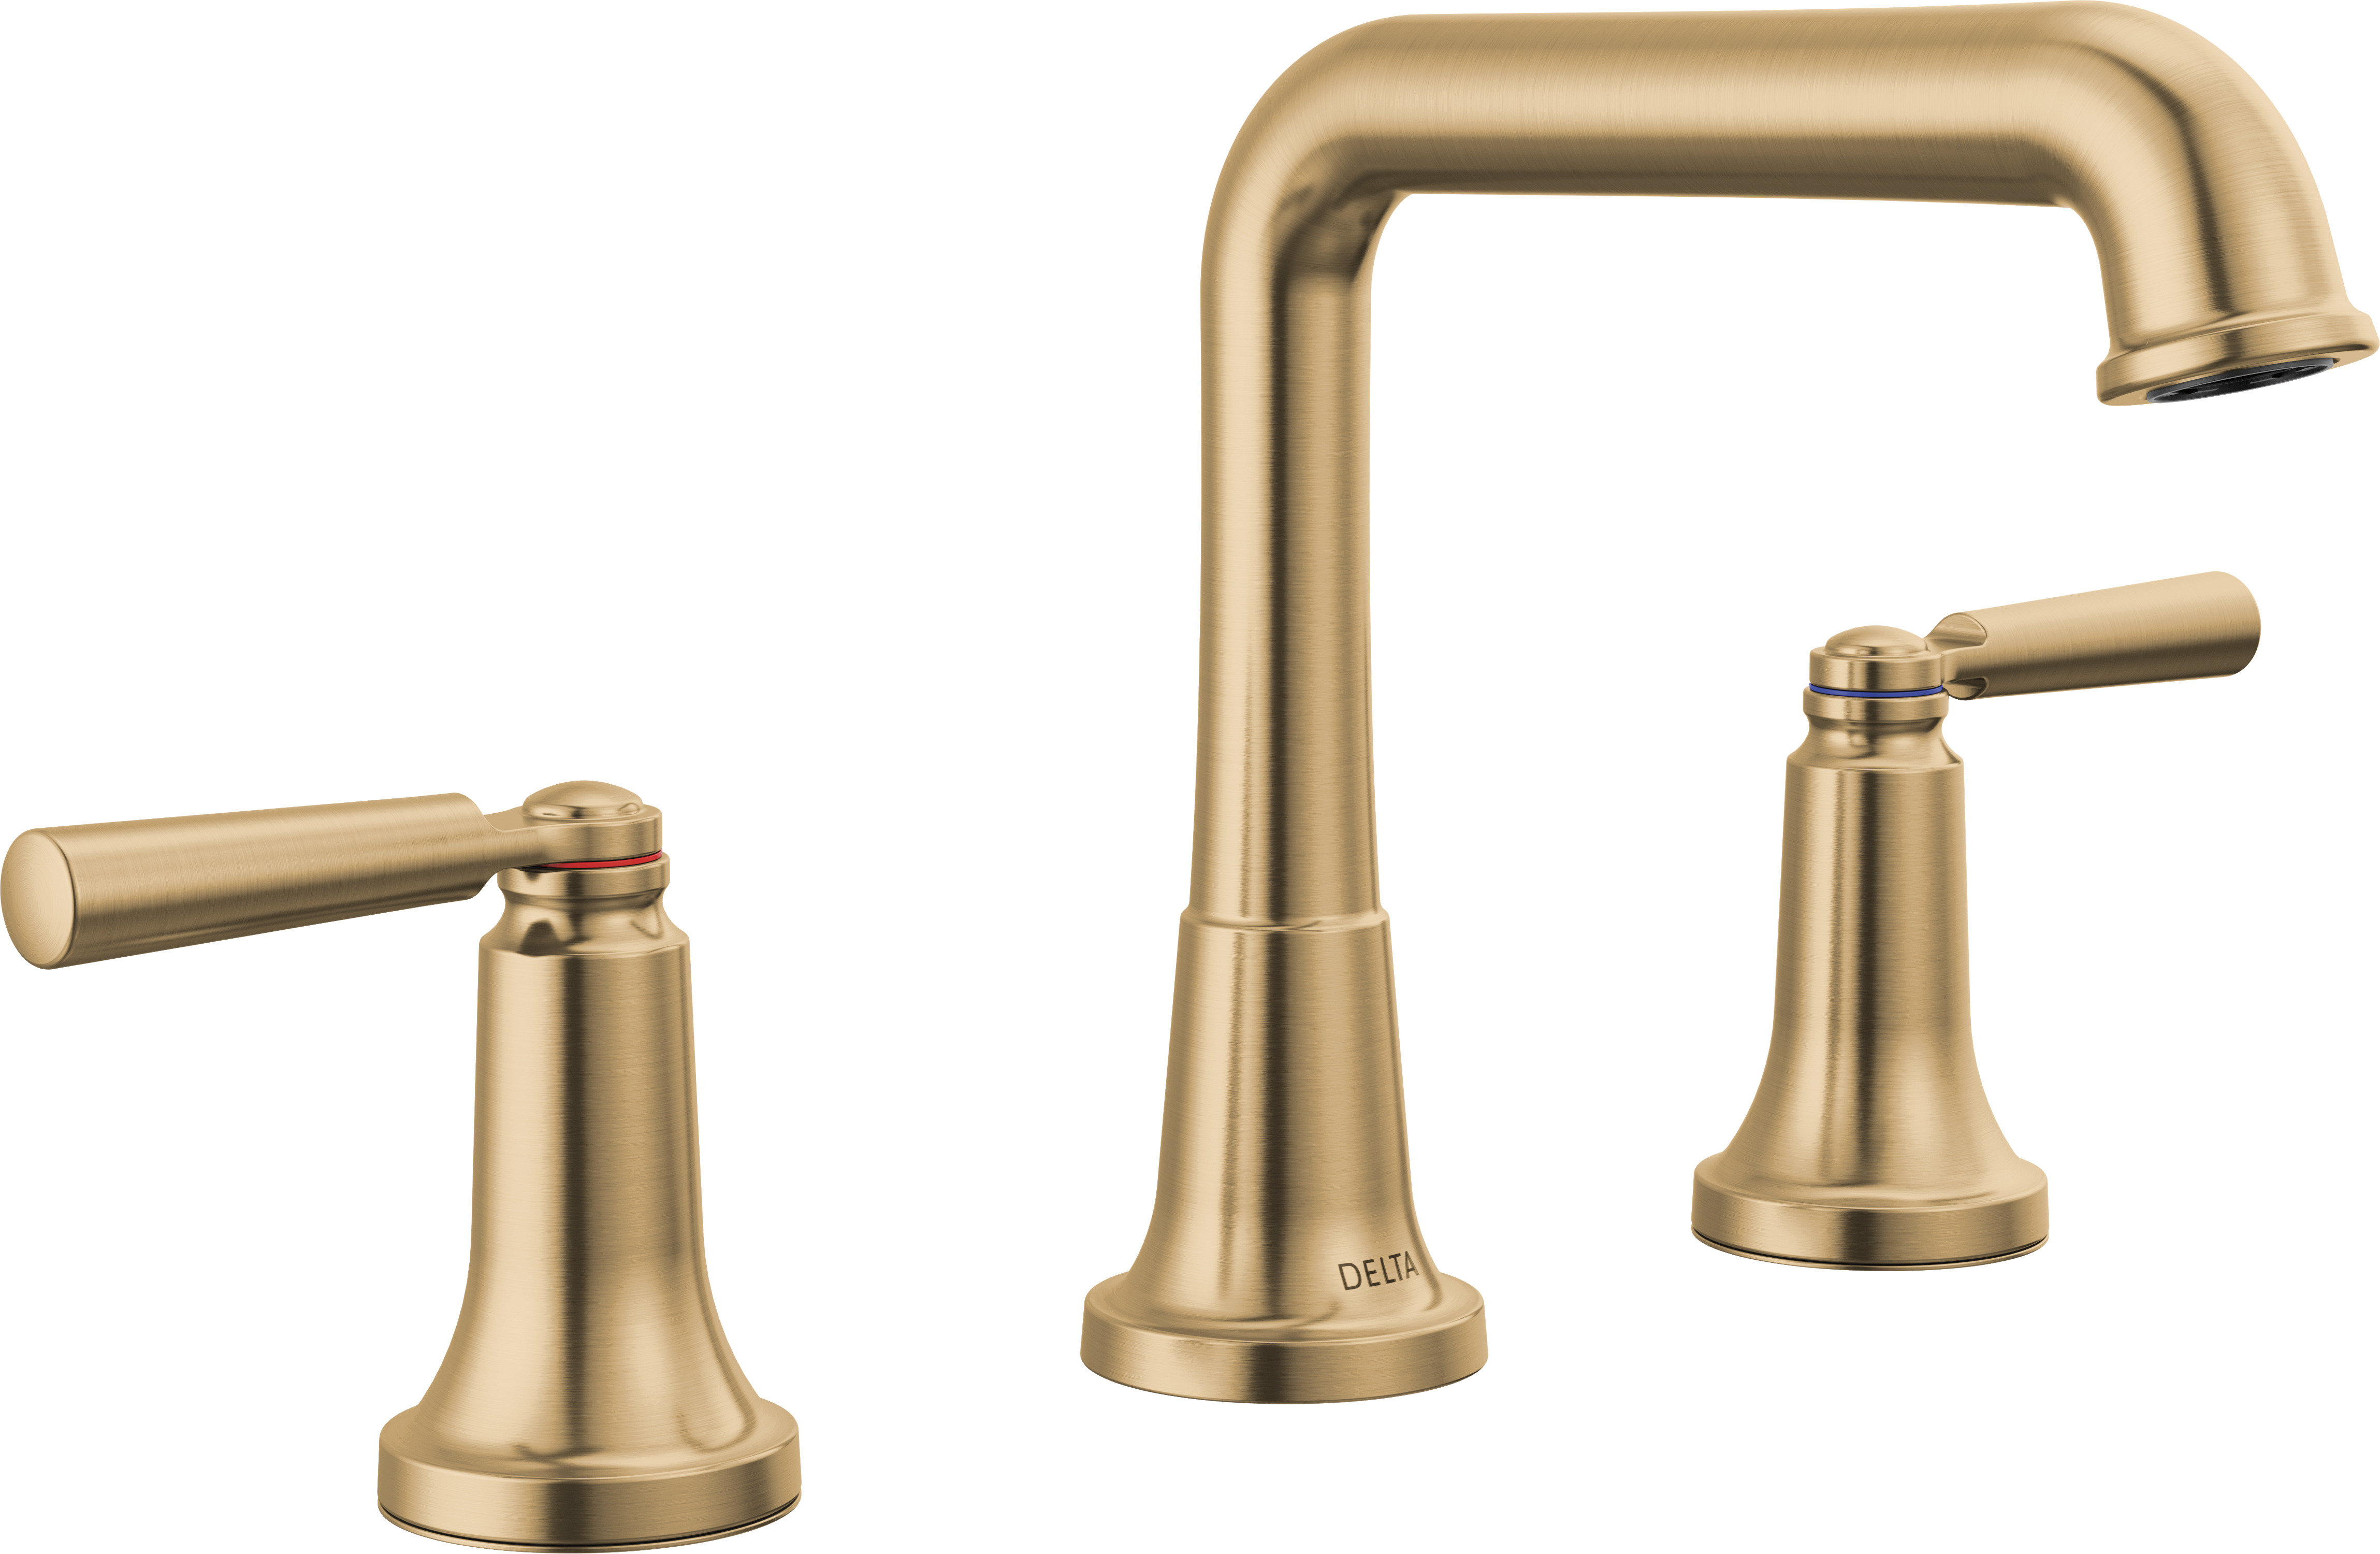 Delta Saylor Two Handle Widespread Bathroom Faucet - Champagne Bronze